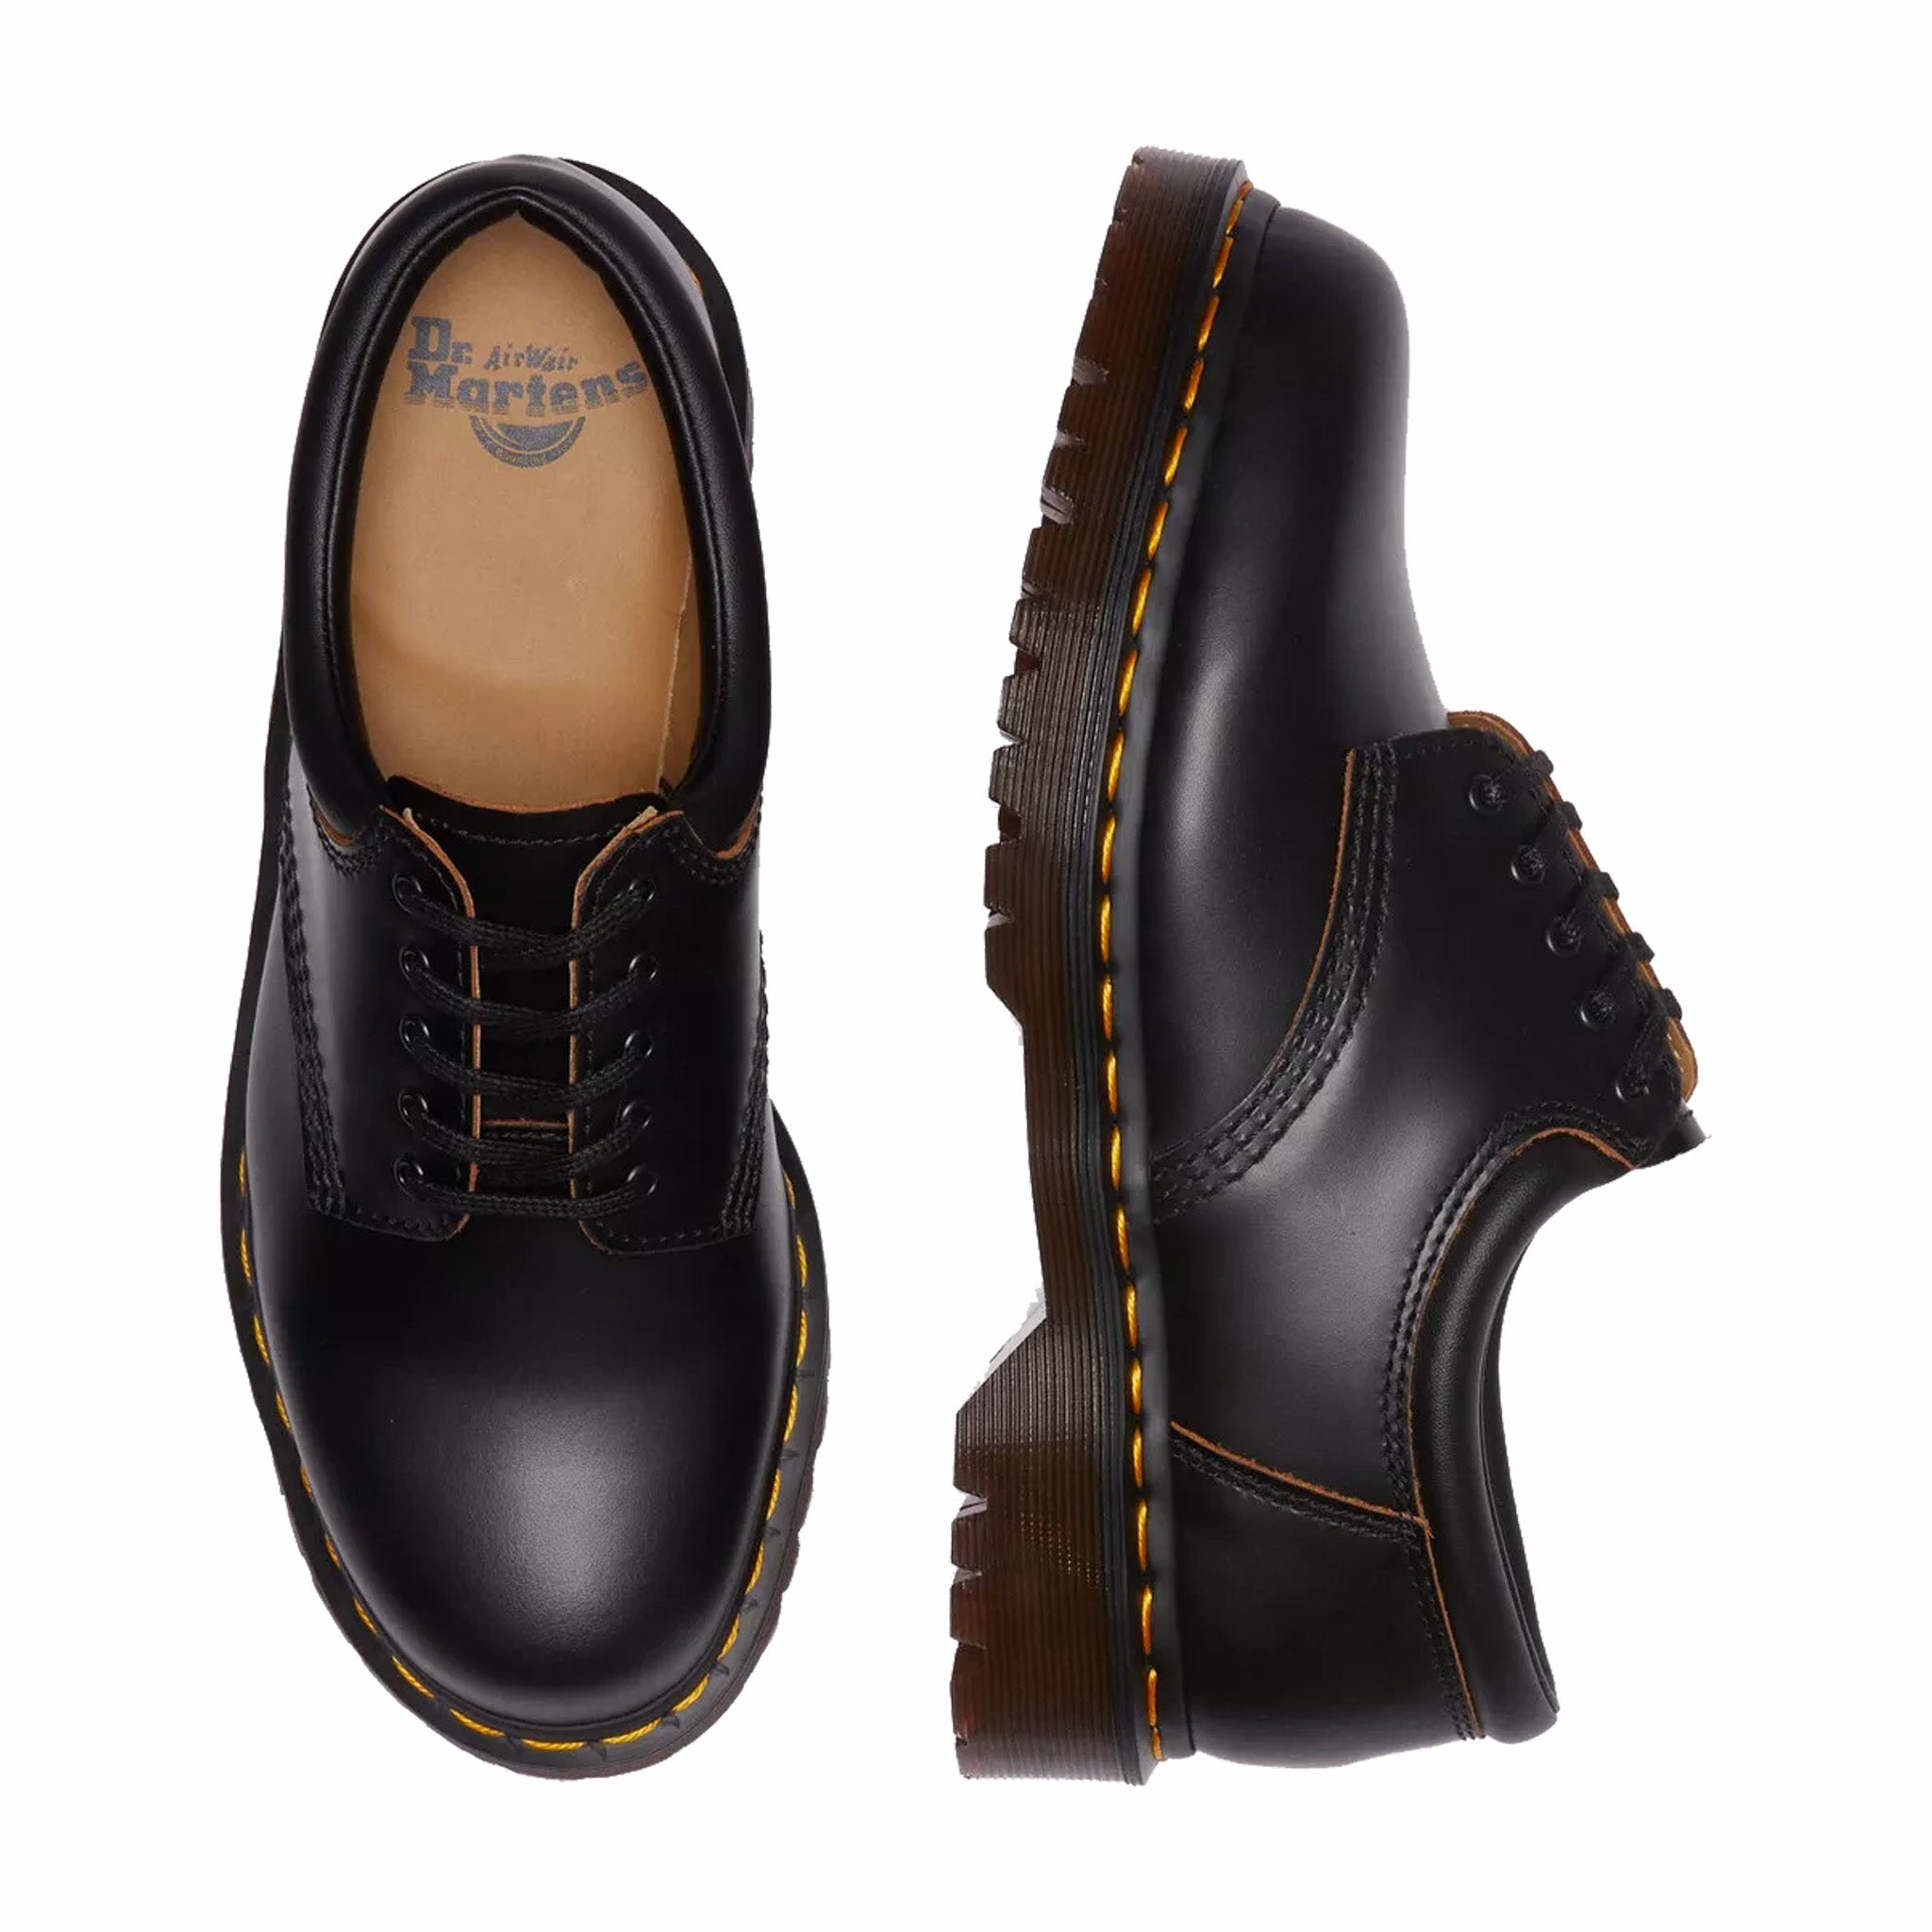 Dr. Martens 8053 Vintage Smooth Leather Oxford Shoes (Black) - August Shop